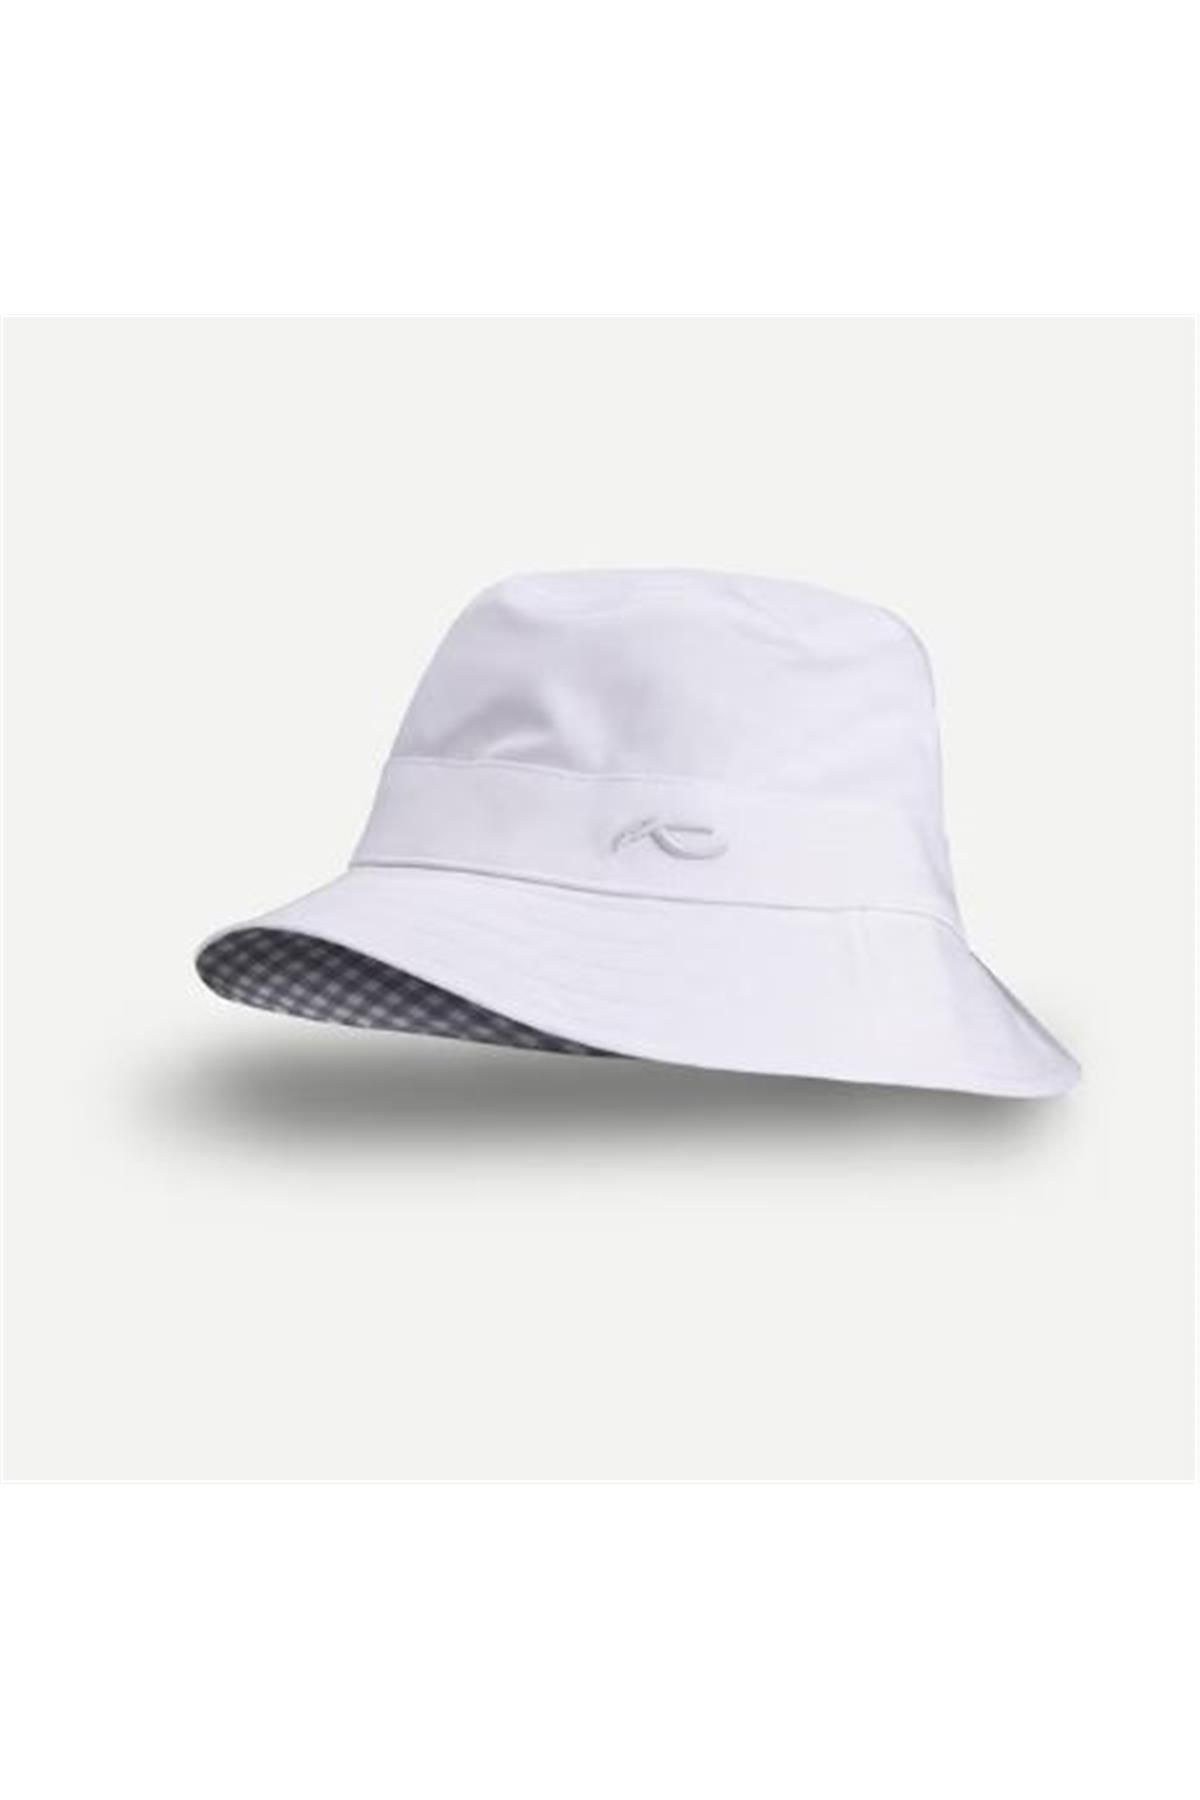 Puma Kjus Bucket Cap - Kadın Bucket Şapka